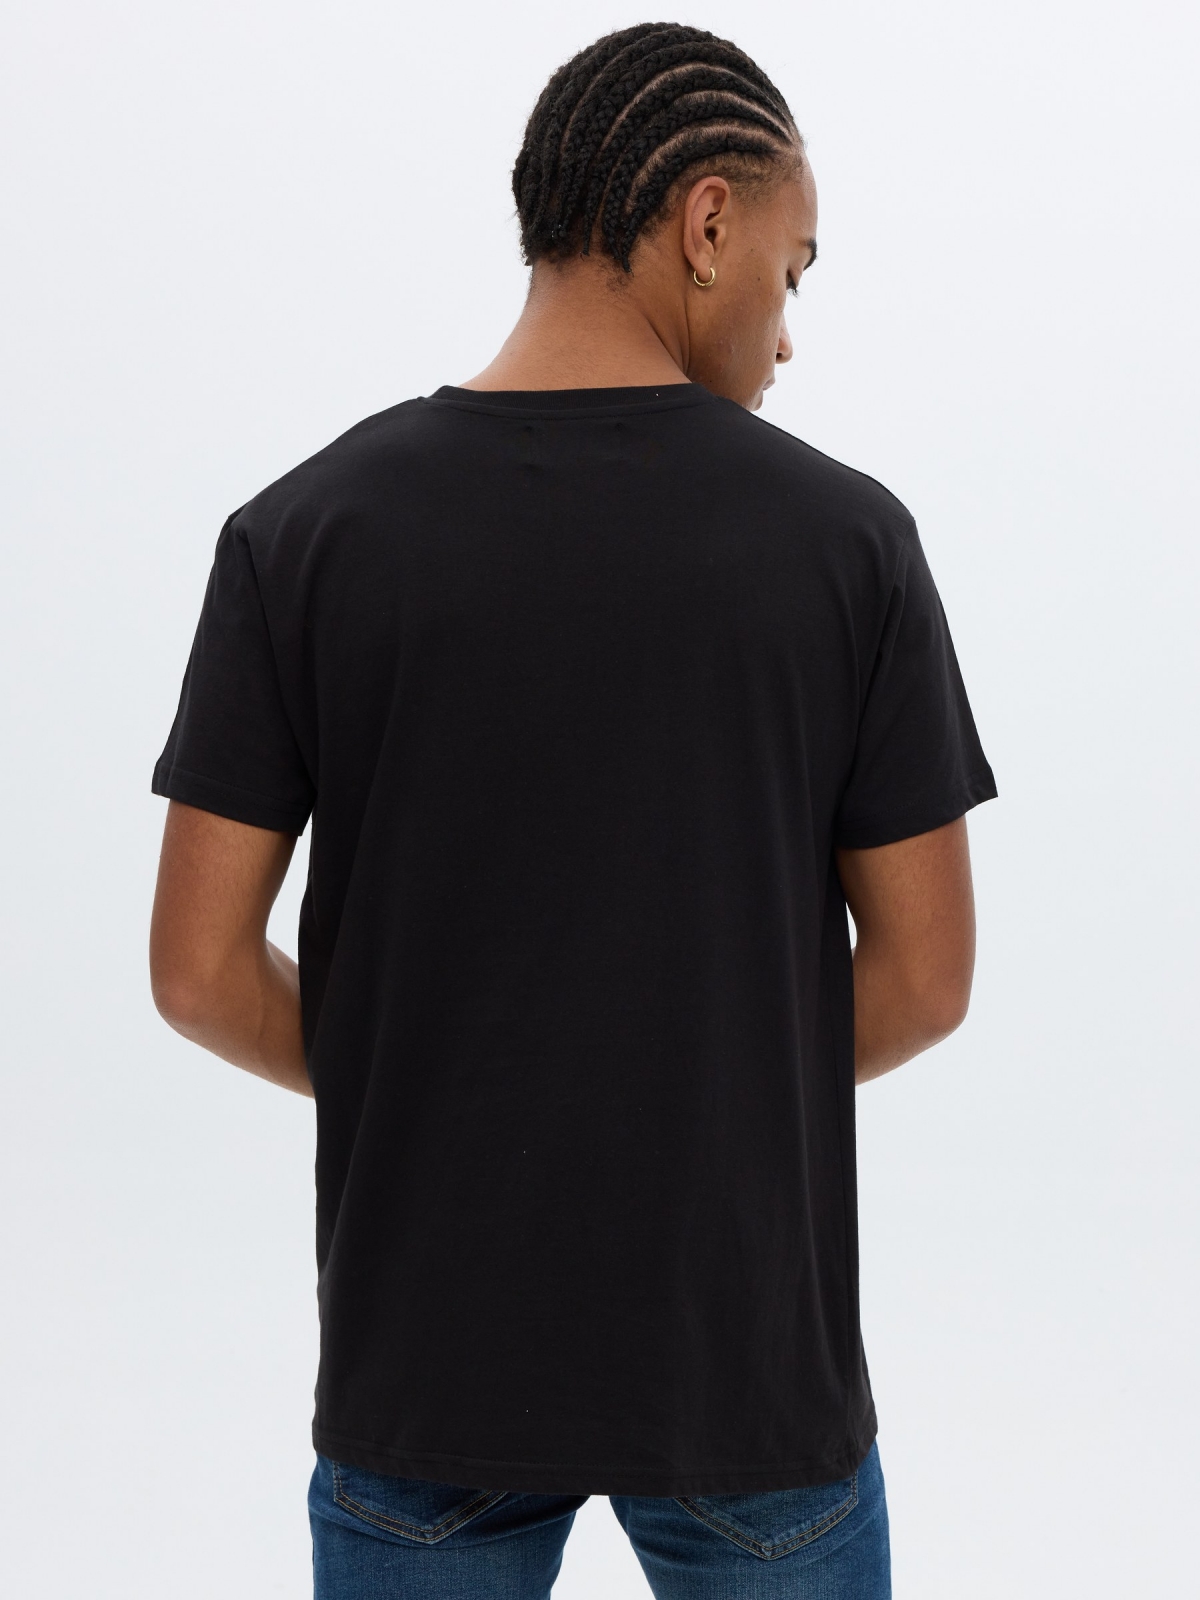 Camiseta estampado calavera negro vista media trasera